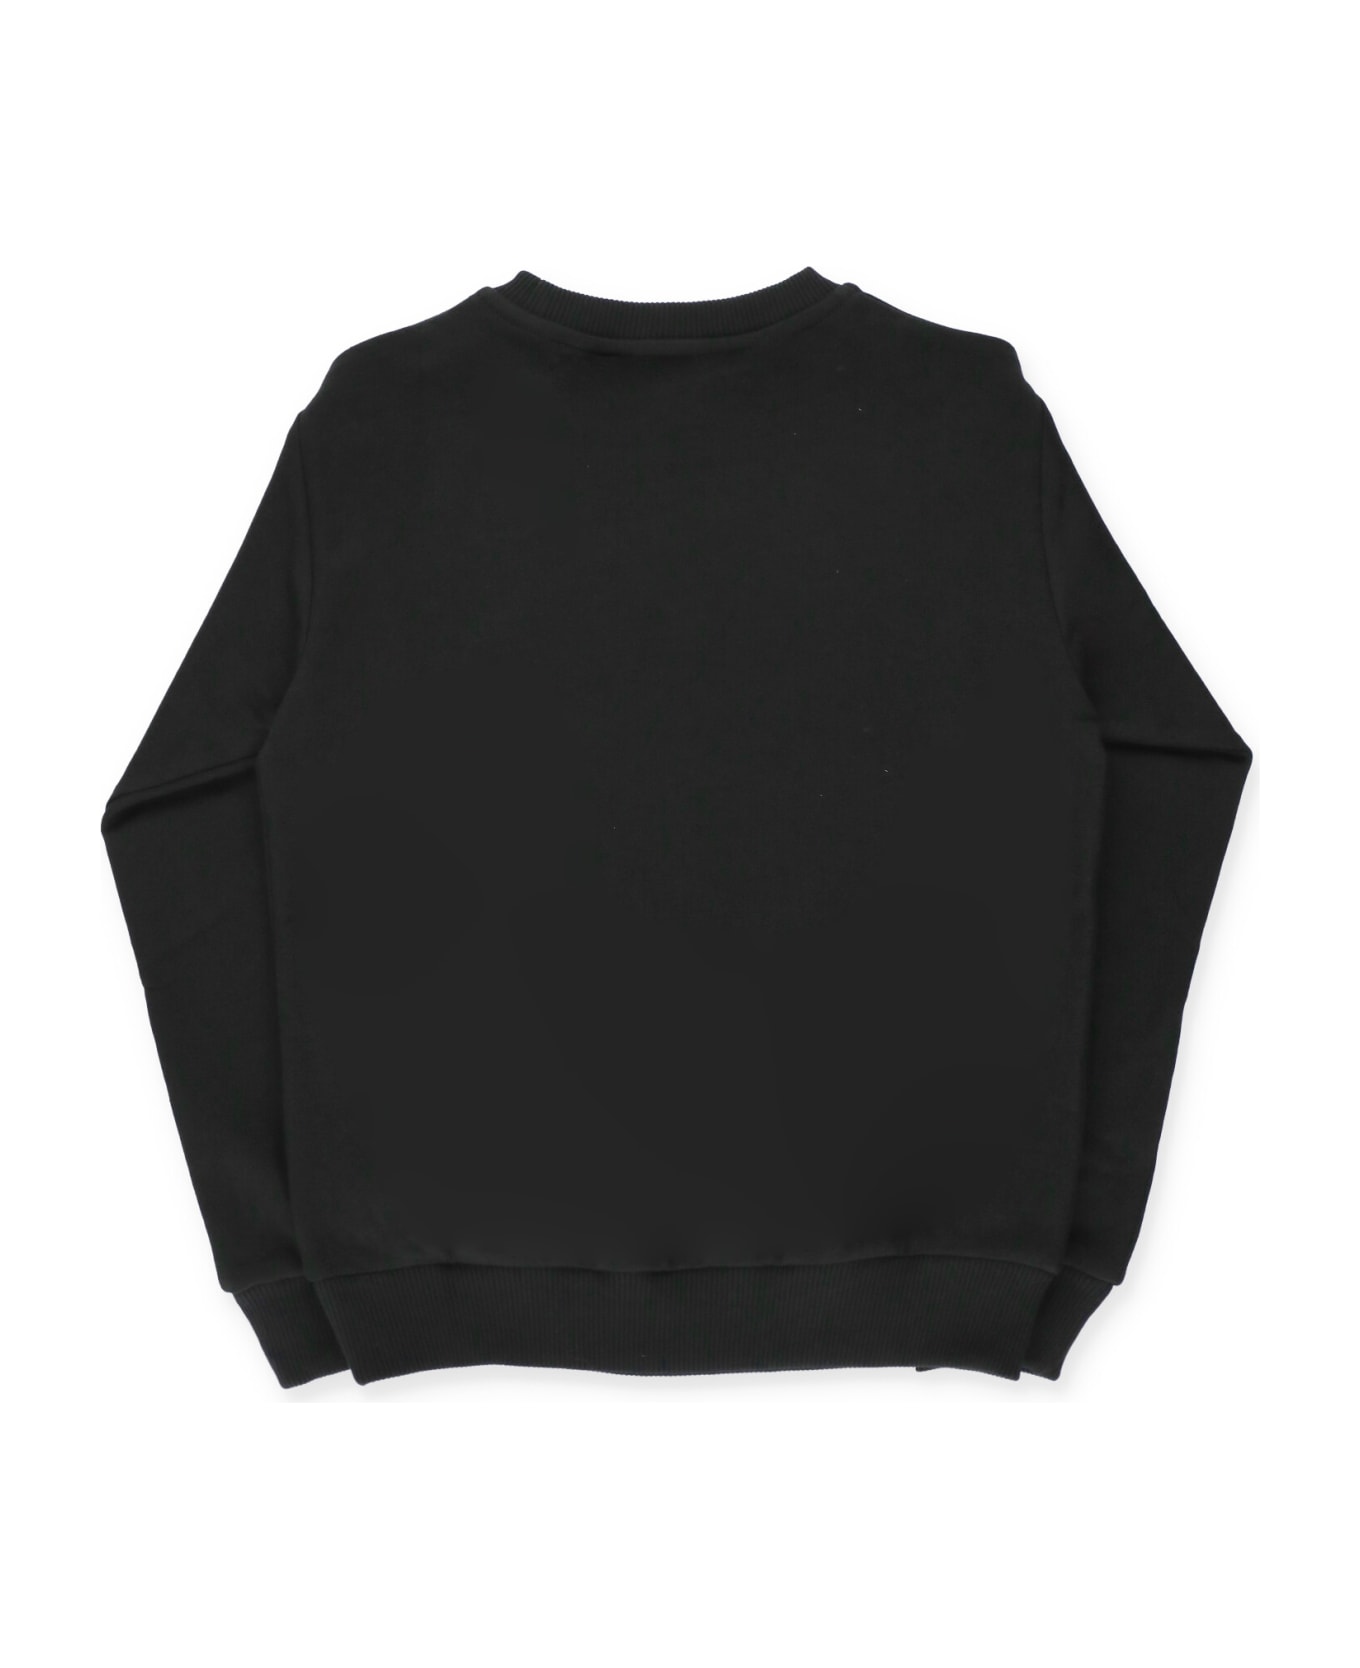 Young Versace Medusa Sweatshirt - BLACK